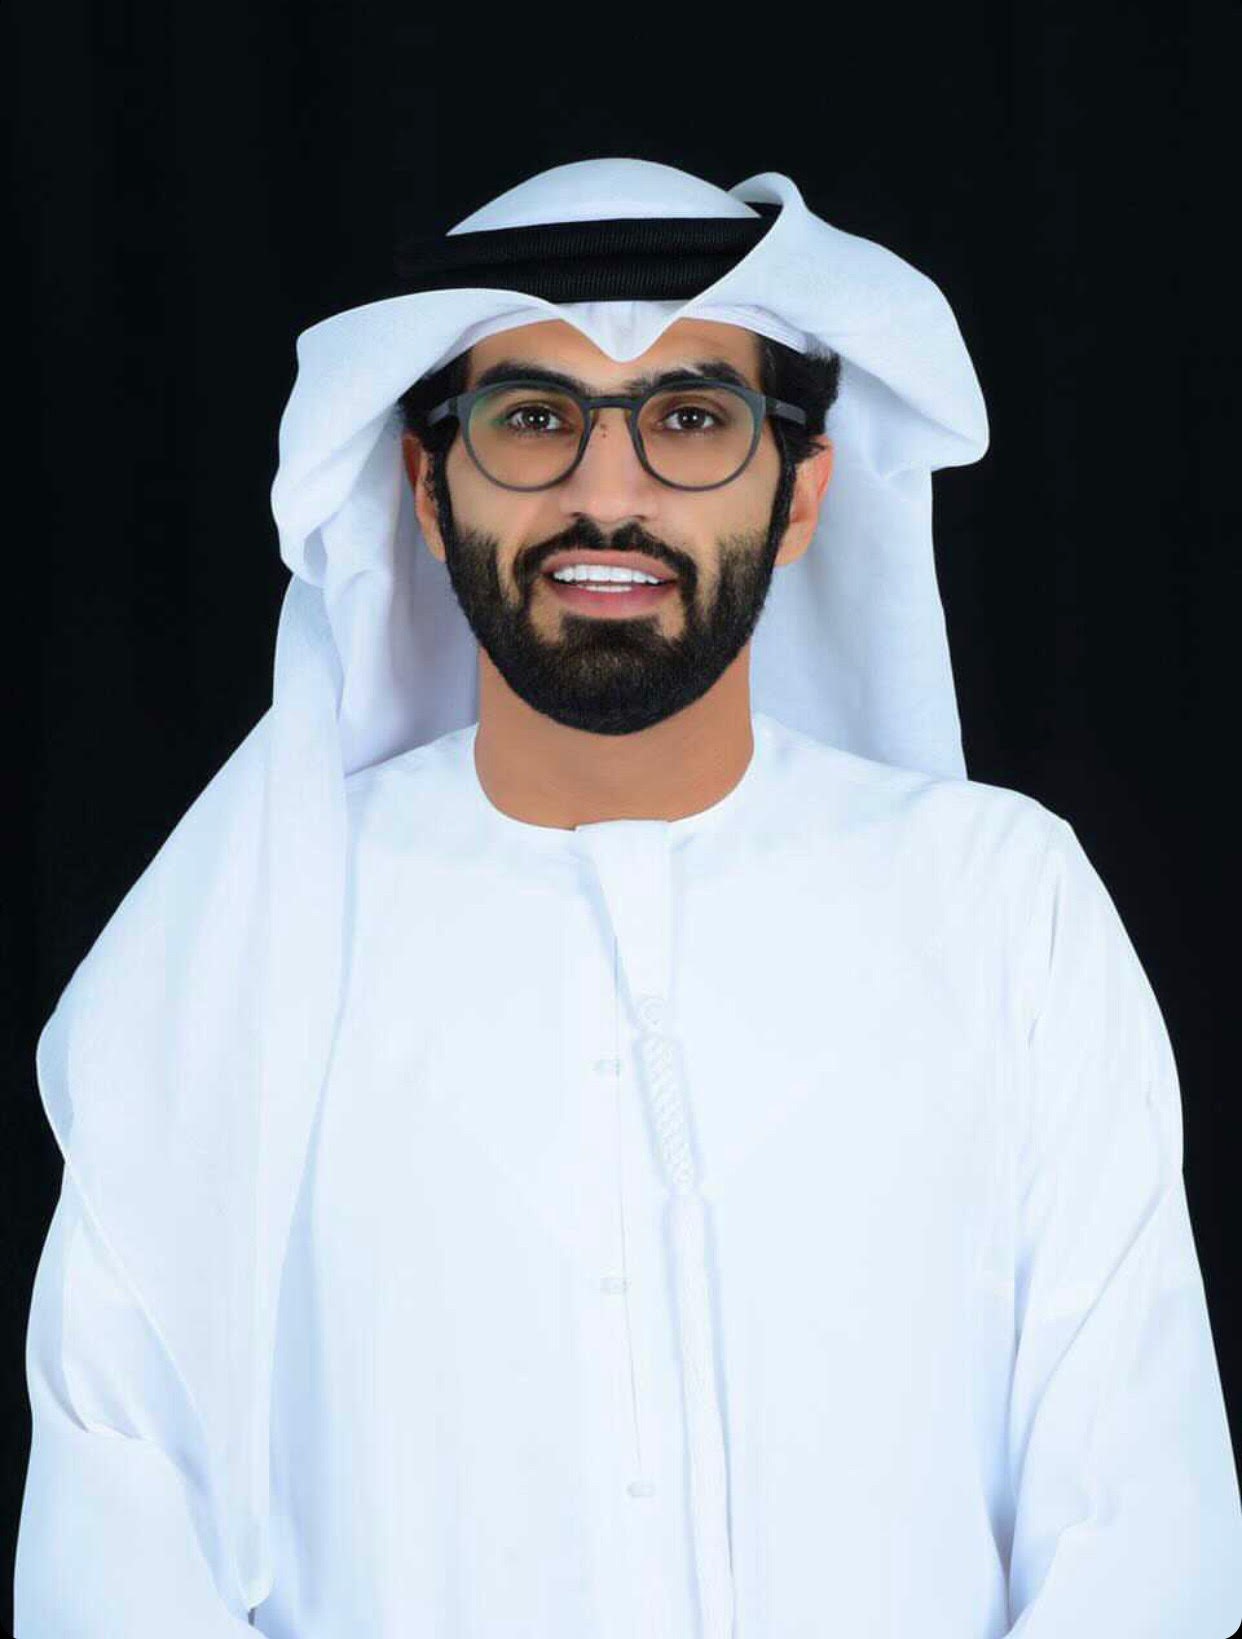 Hamad bin Rashed – The UAE’s Golden boy